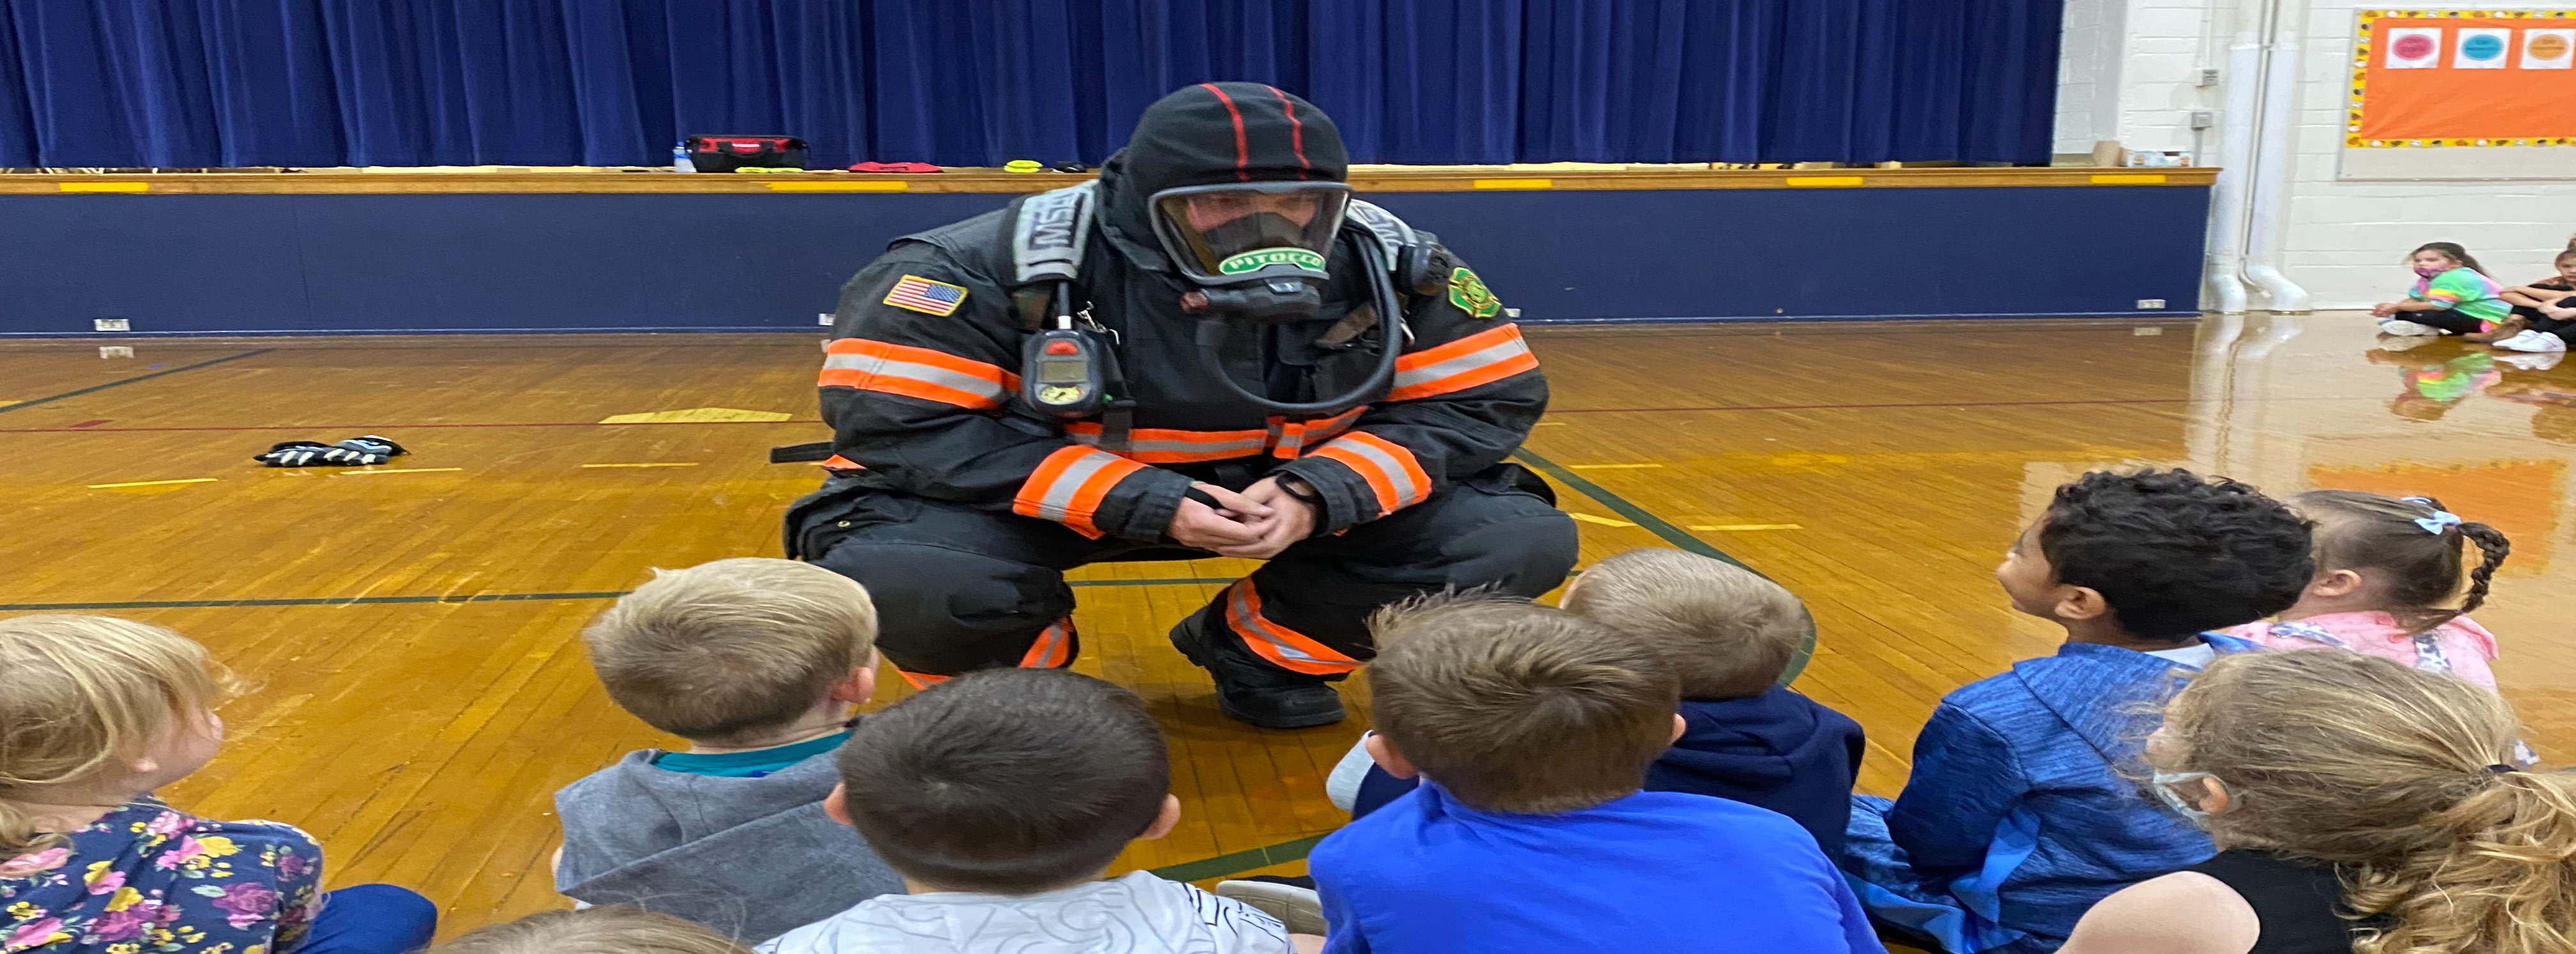 Firefighter visits EECC